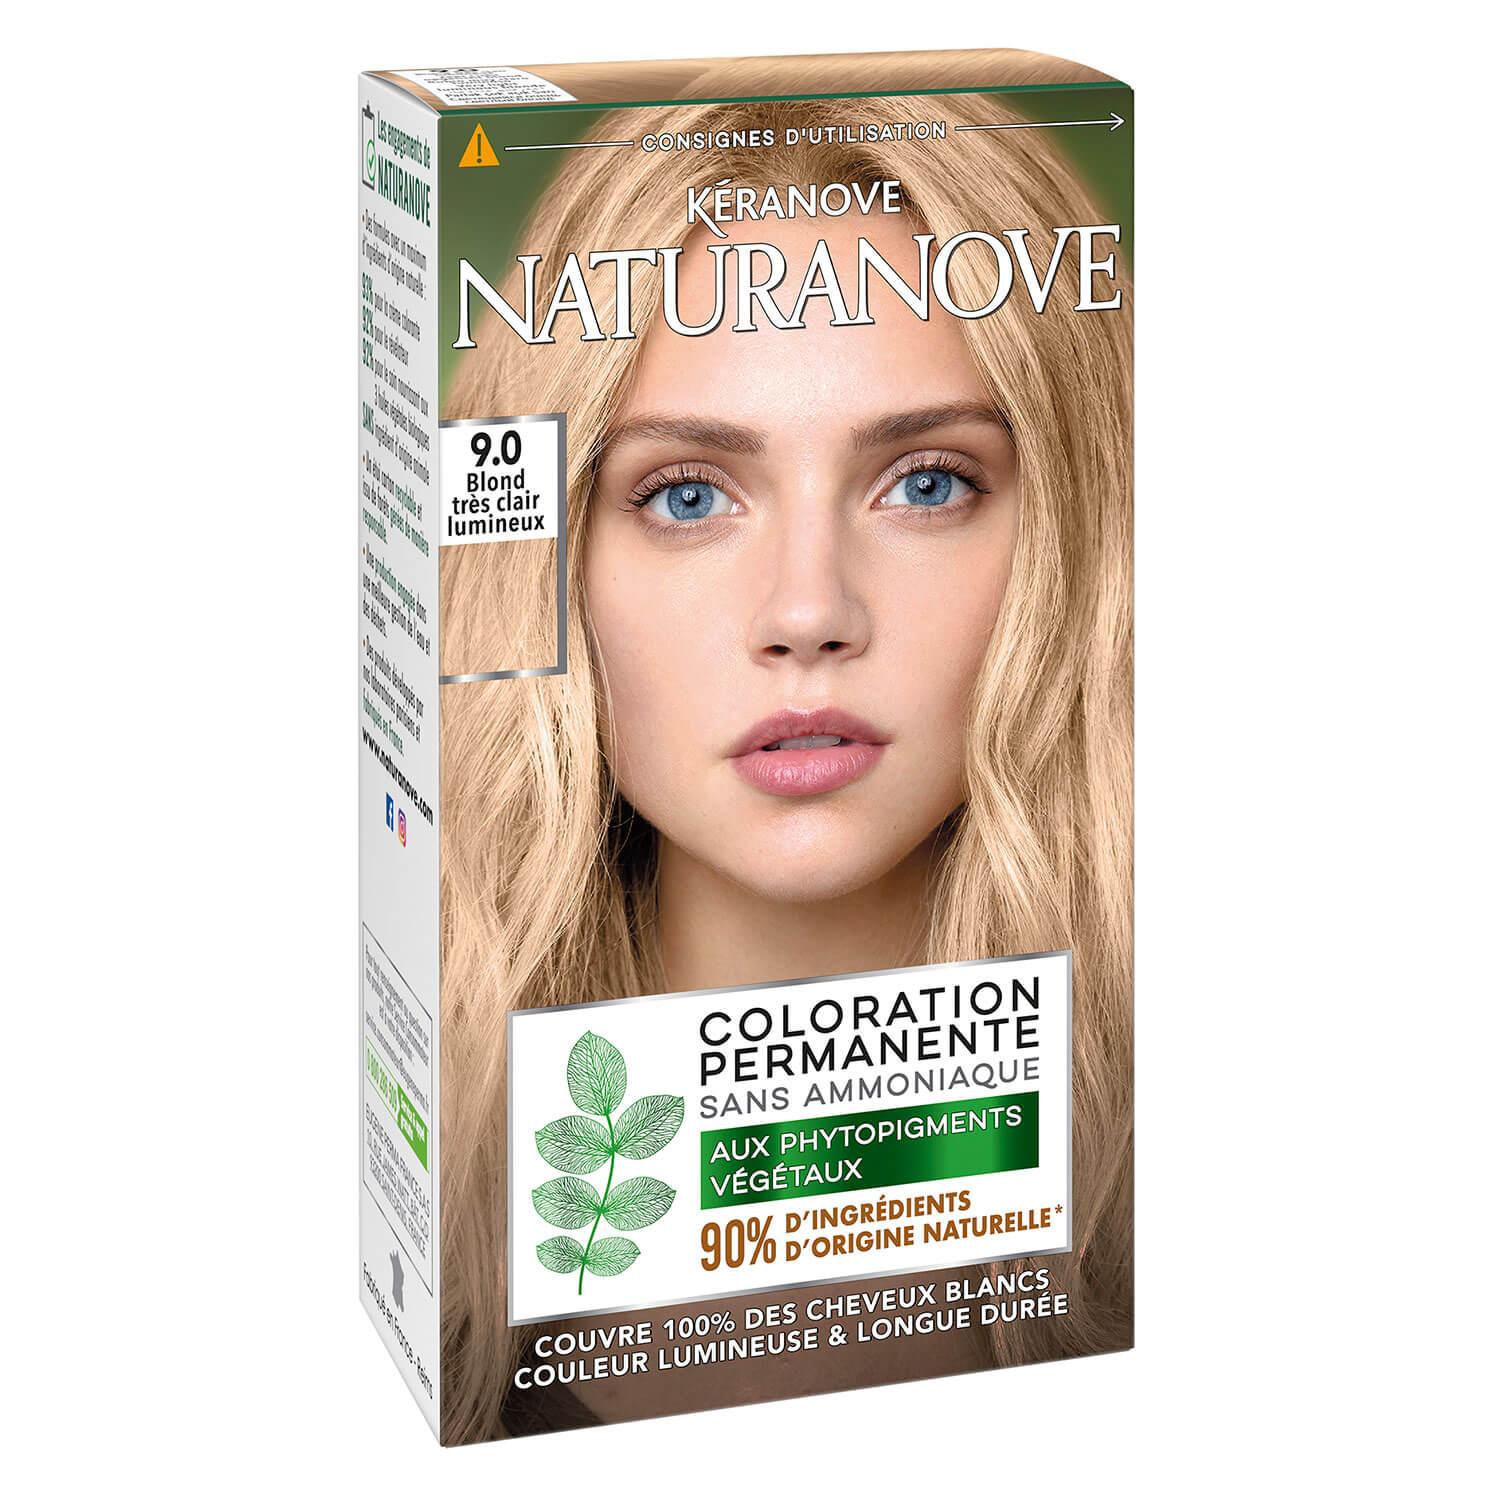 Naturanove - Permanent Hair Color Very Light Luminous Blonde 9.0